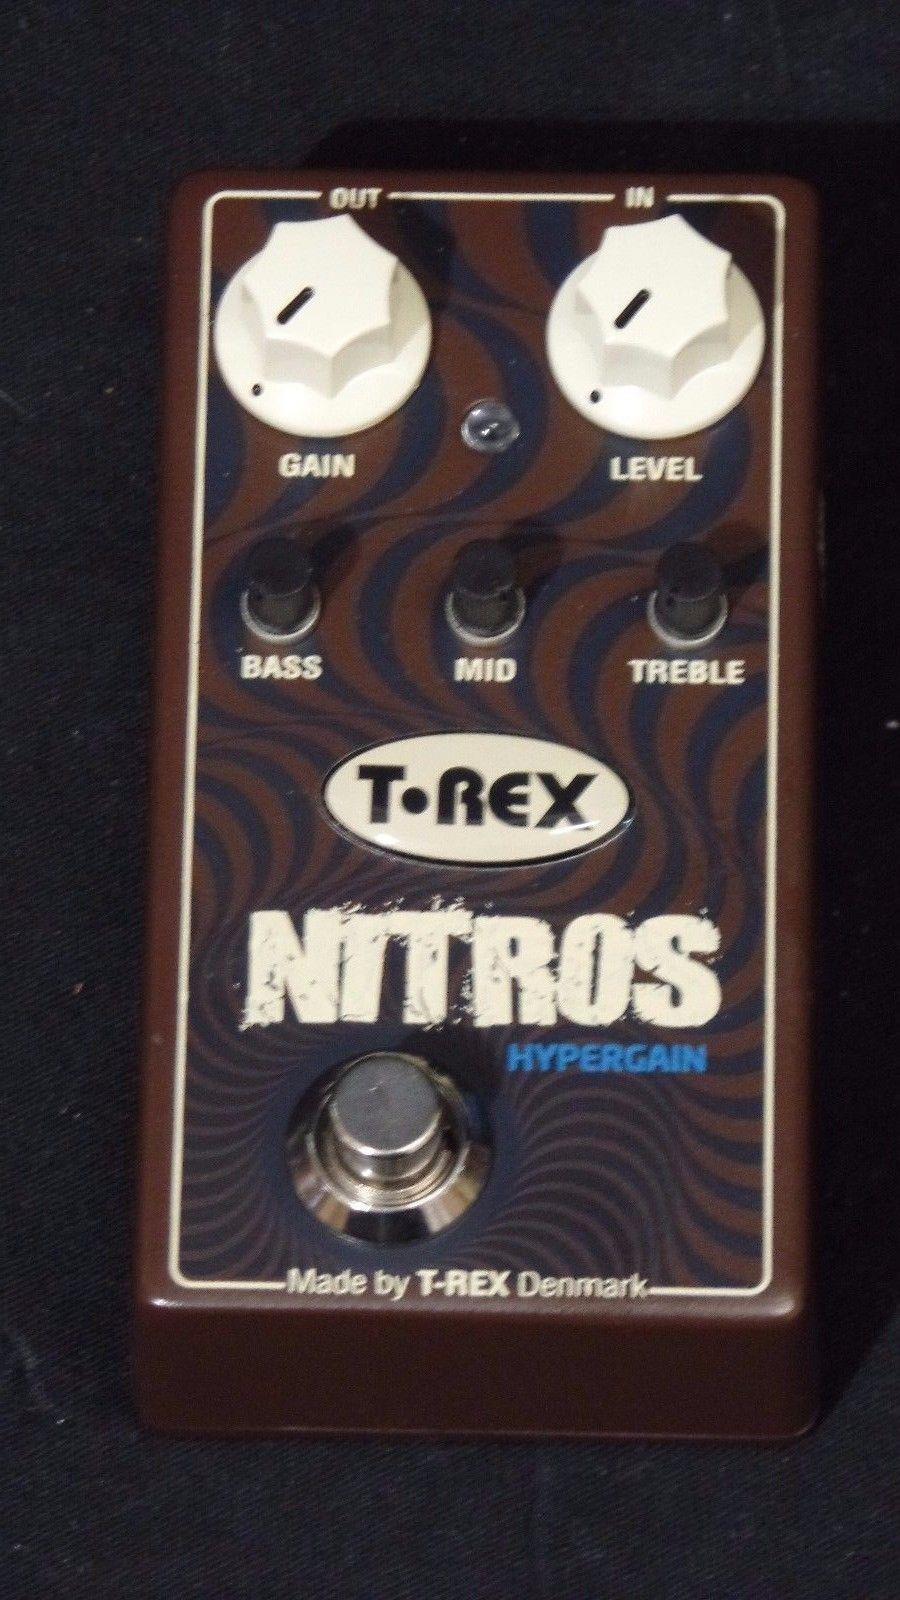 T-Rex Nitros Hypergain Distortion Electric Guitar Effects FX Pedal TRex #2